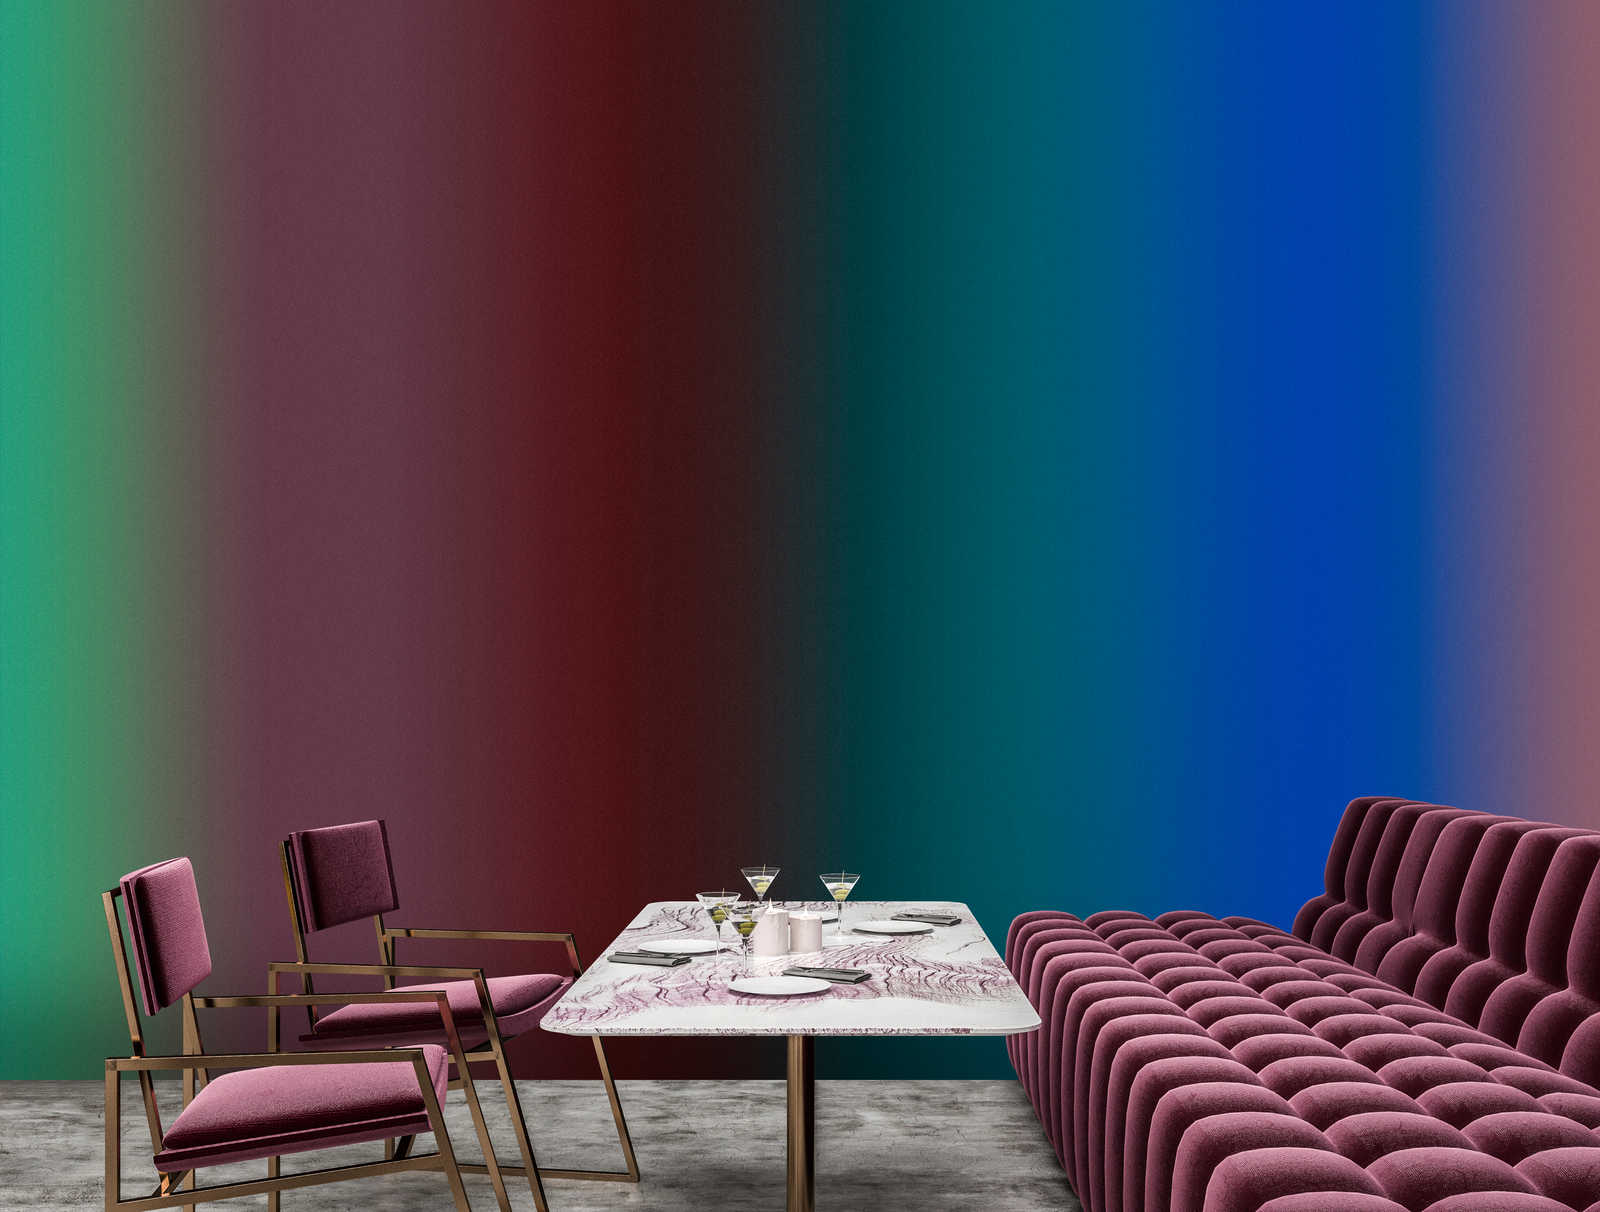             Over the Rainbow 2 – Farbverlauf Fototapete buntes Streifendesign
        